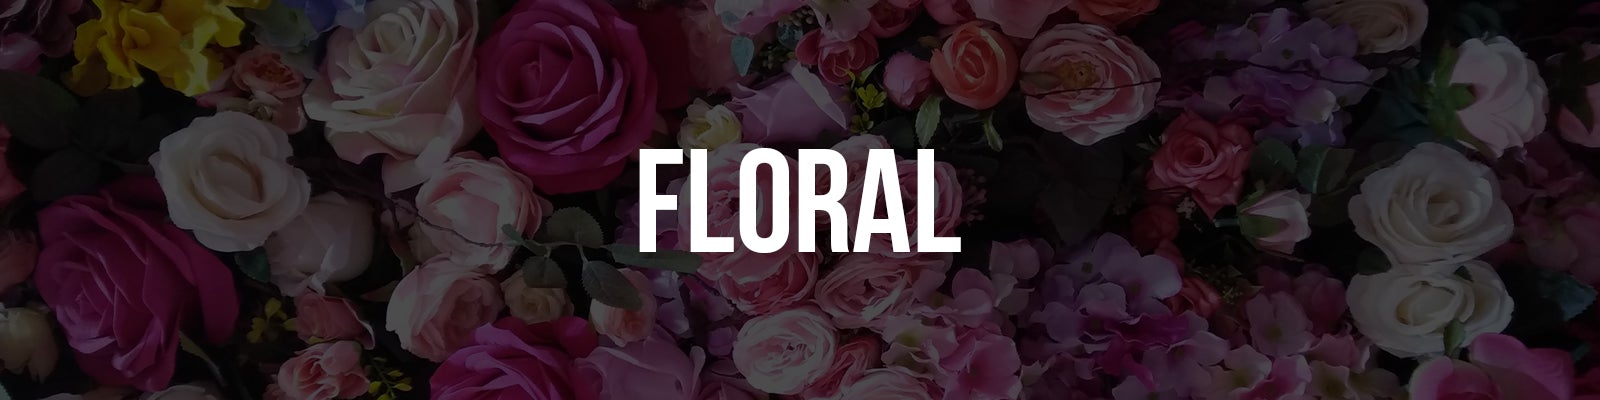 floral perfumes